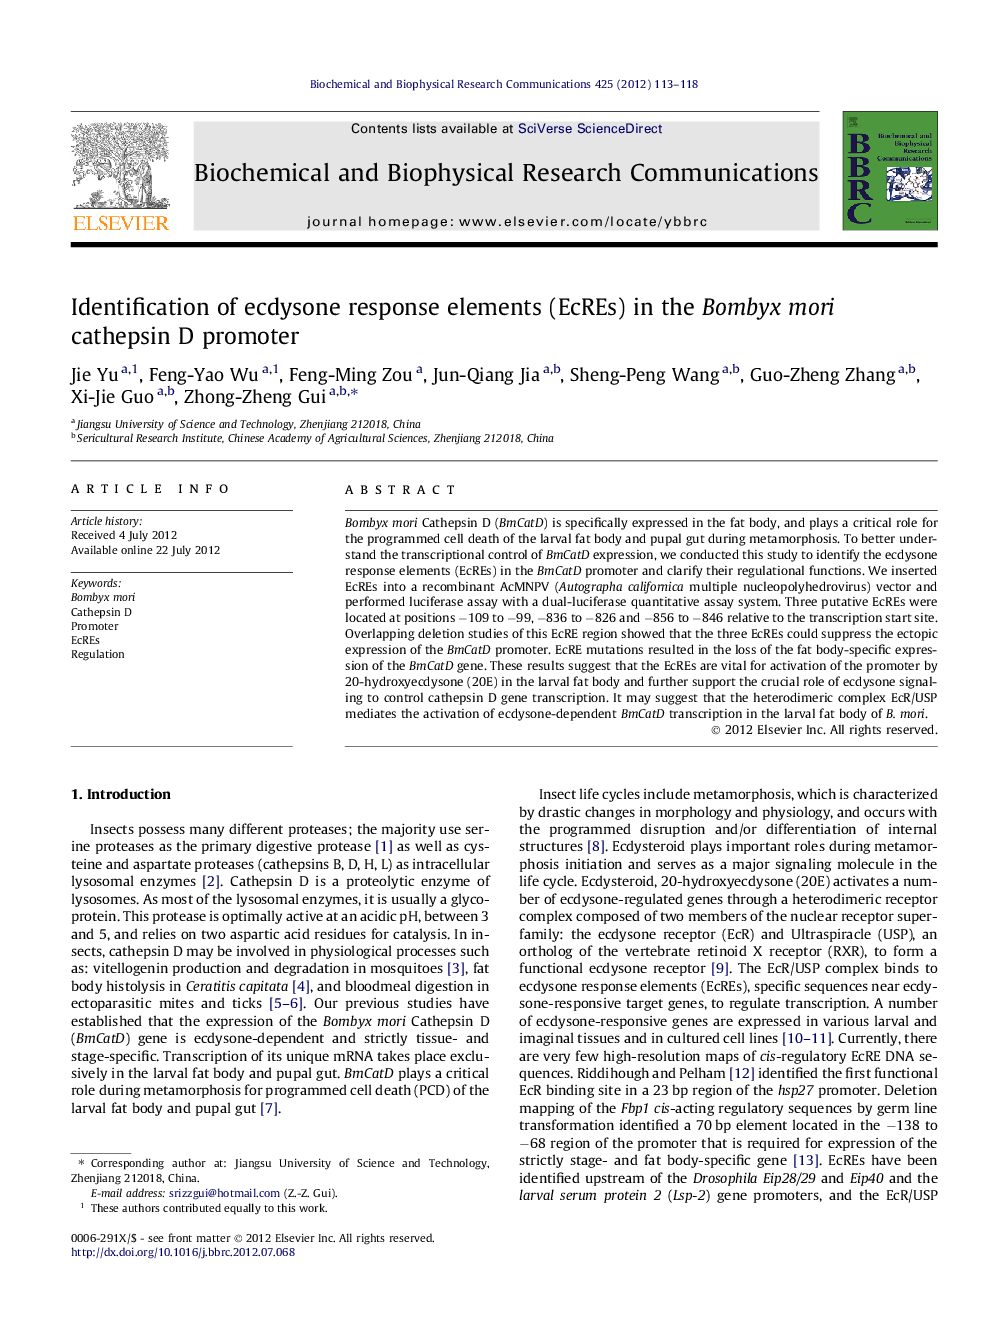 Identification of ecdysone response elements (EcREs) in the Bombyx mori cathepsin D promoter